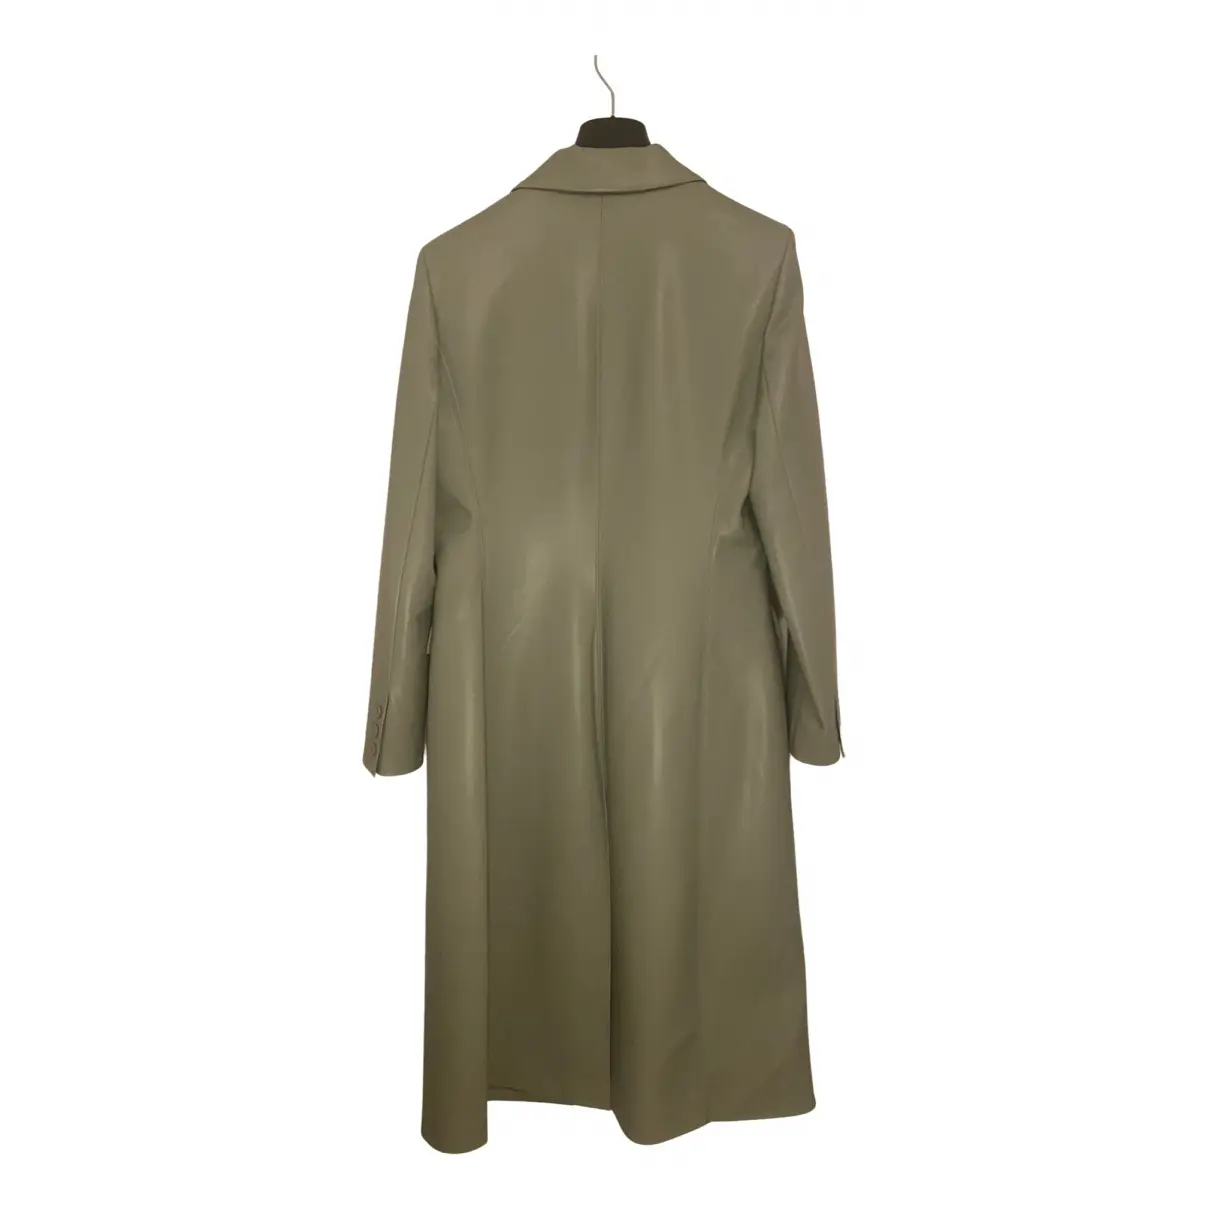 Buy Alice & Olivia Vegan leather coat online